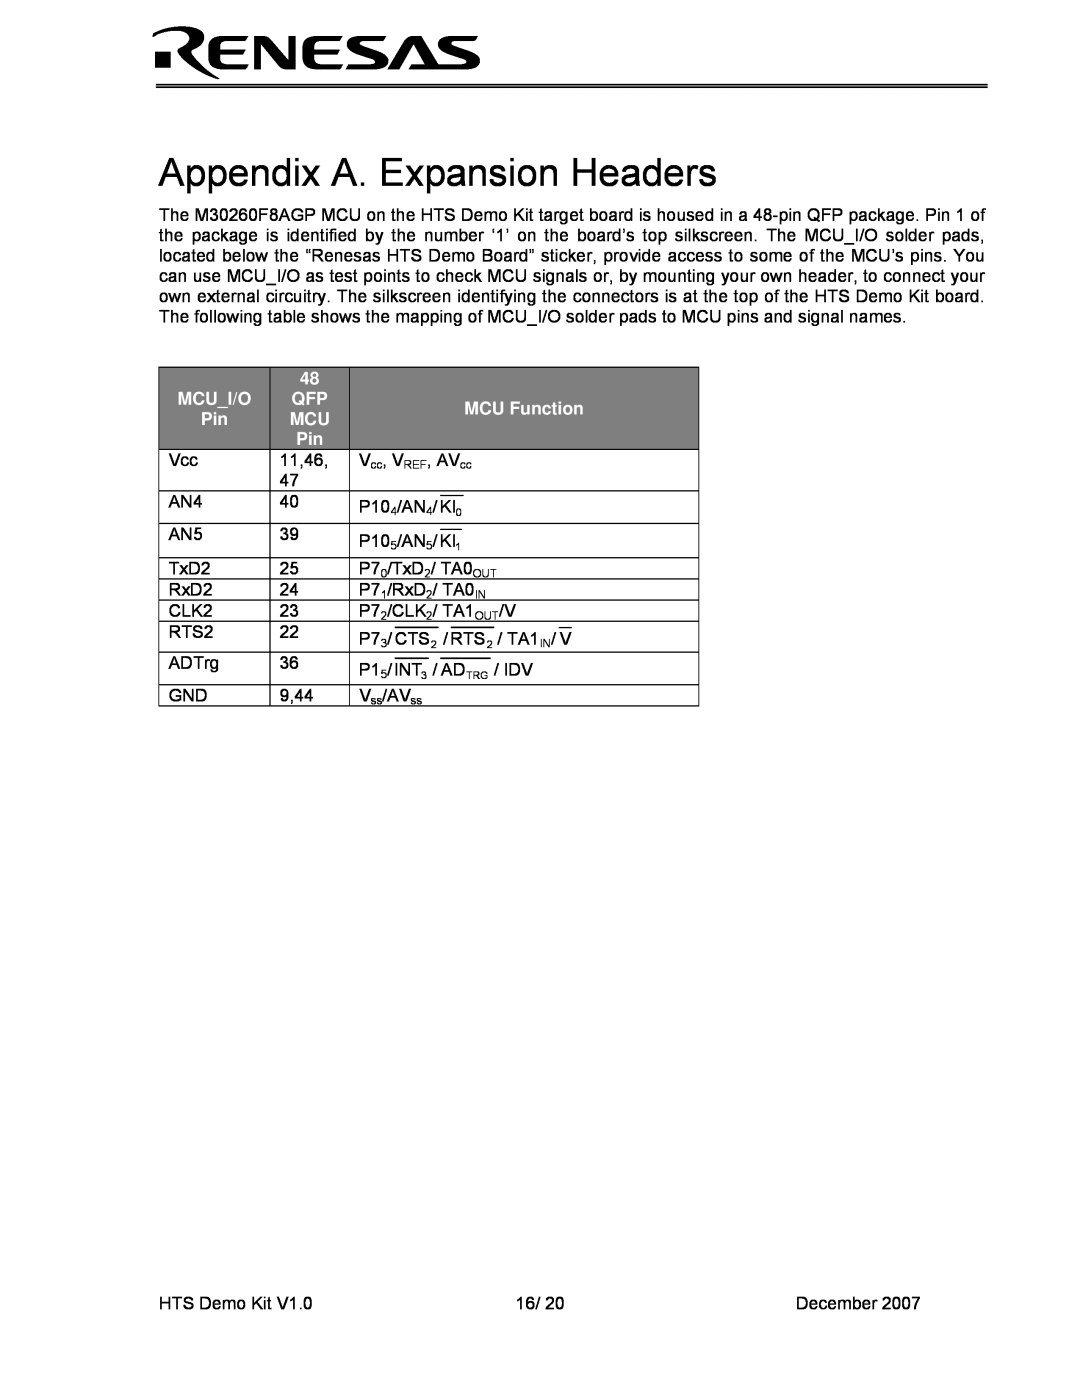 Renesas HEW Target user manual Appendix A. Expansion Headers, Mcui/O, MCU Function 